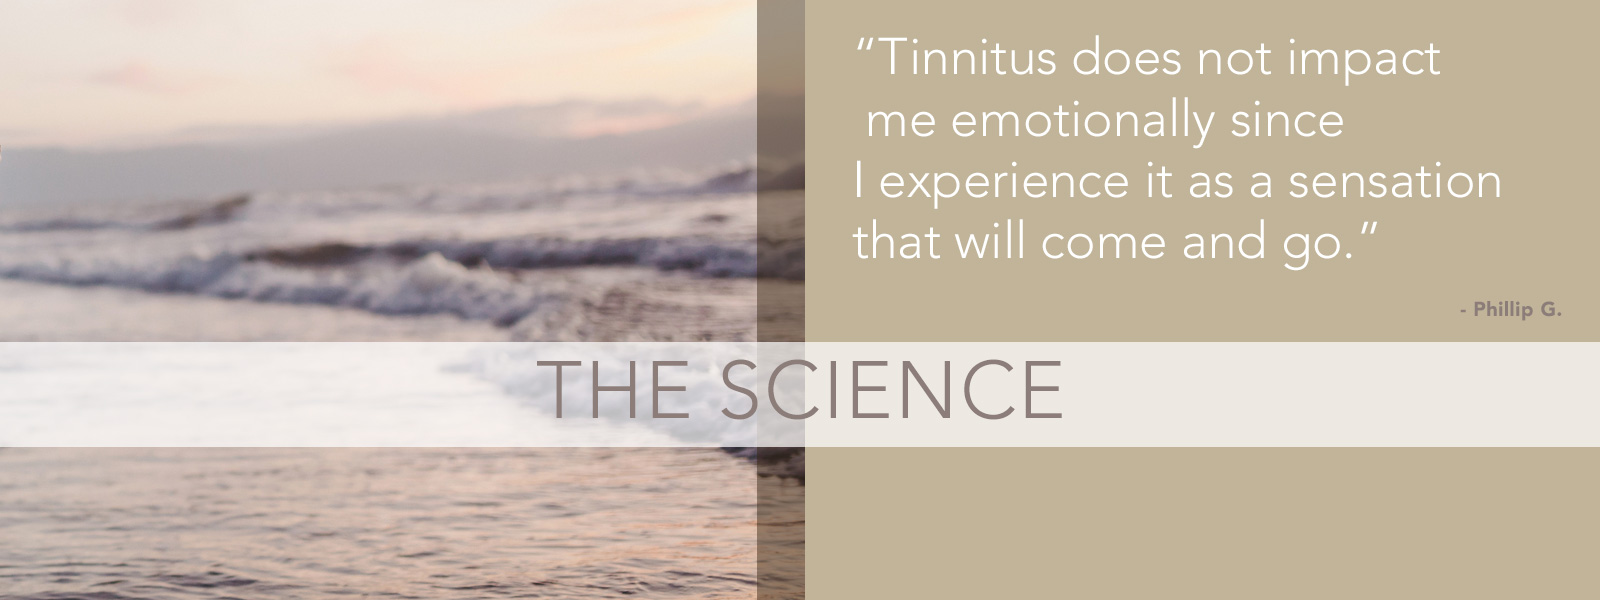 Mindfulness-Based Tinnitus Stress Reduction